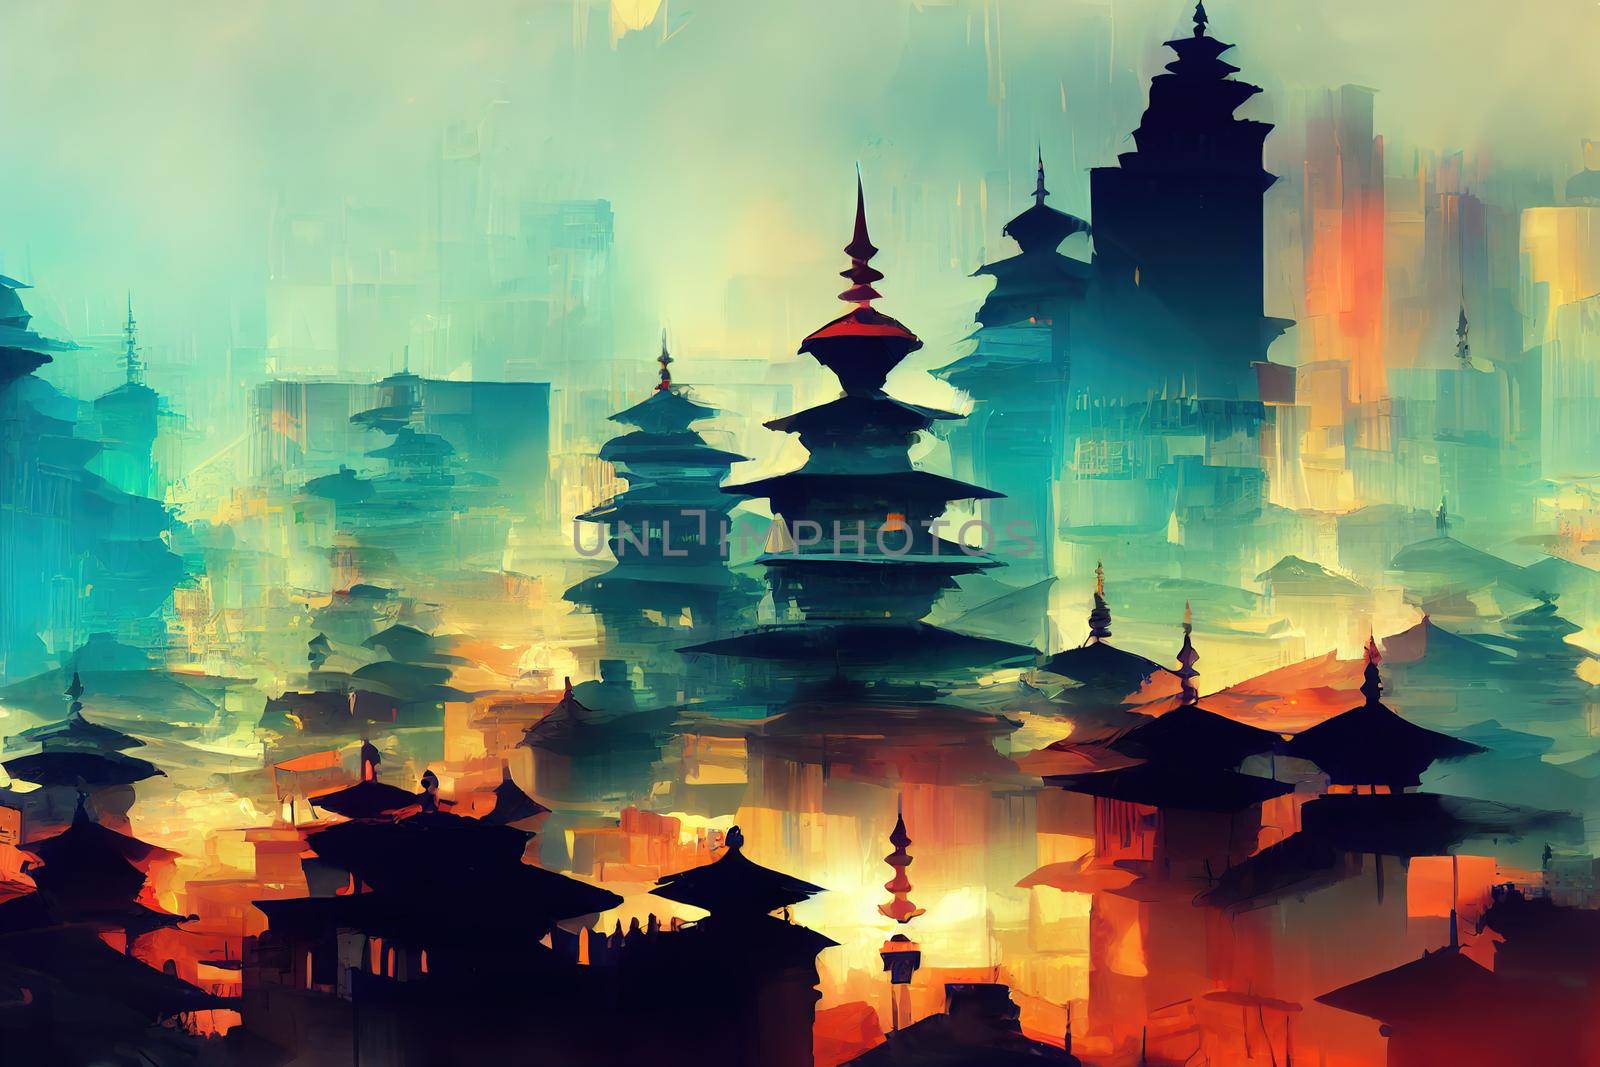 Kathmandu abstract city 2d Anime illustration by 2ragon